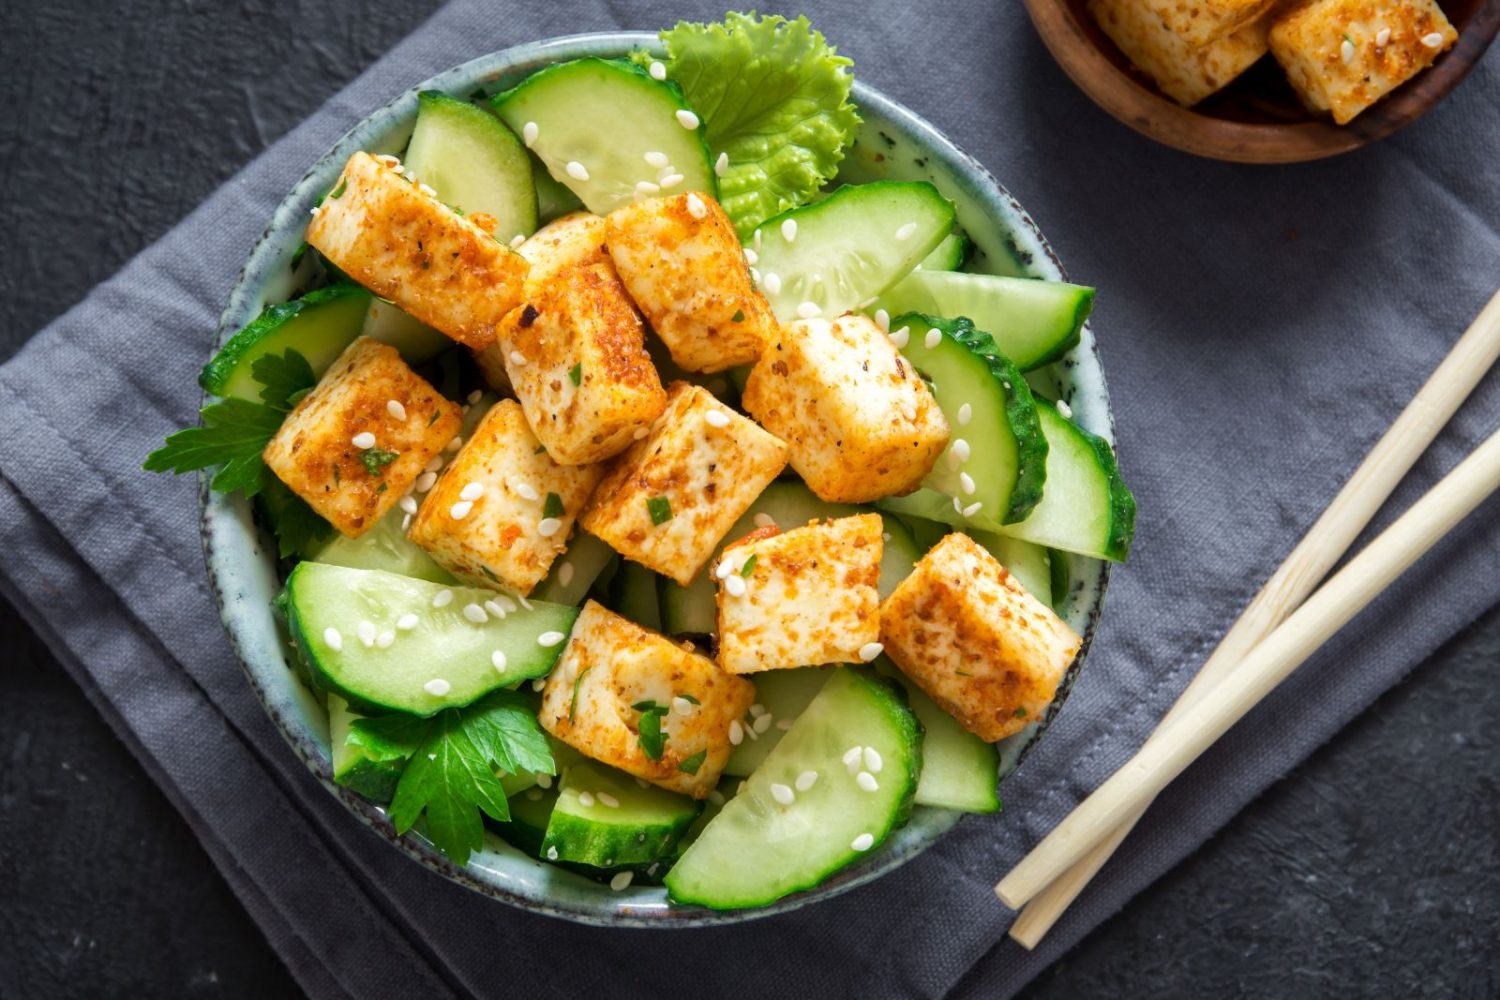 Fried tofu alternative